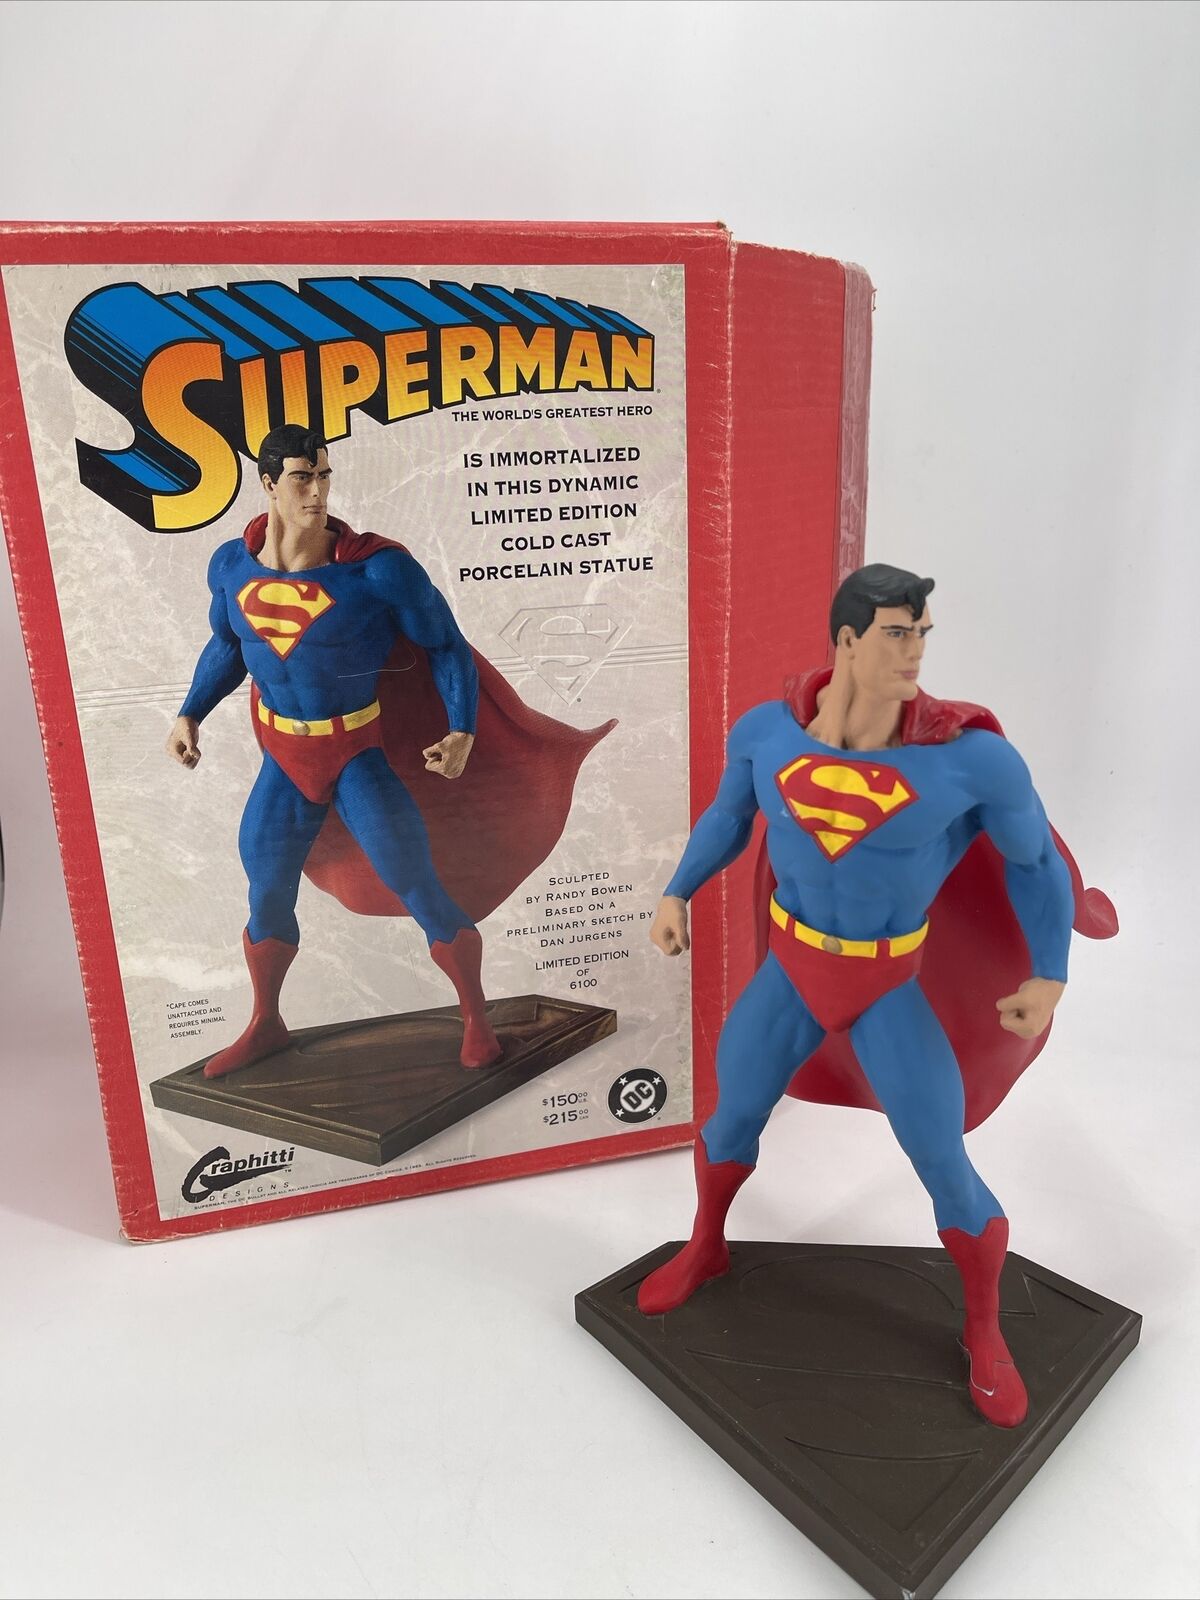 Superman Limited Edition Randy Bowen Statue 5173 of 6100 (Seinfeld) PLEASE READ